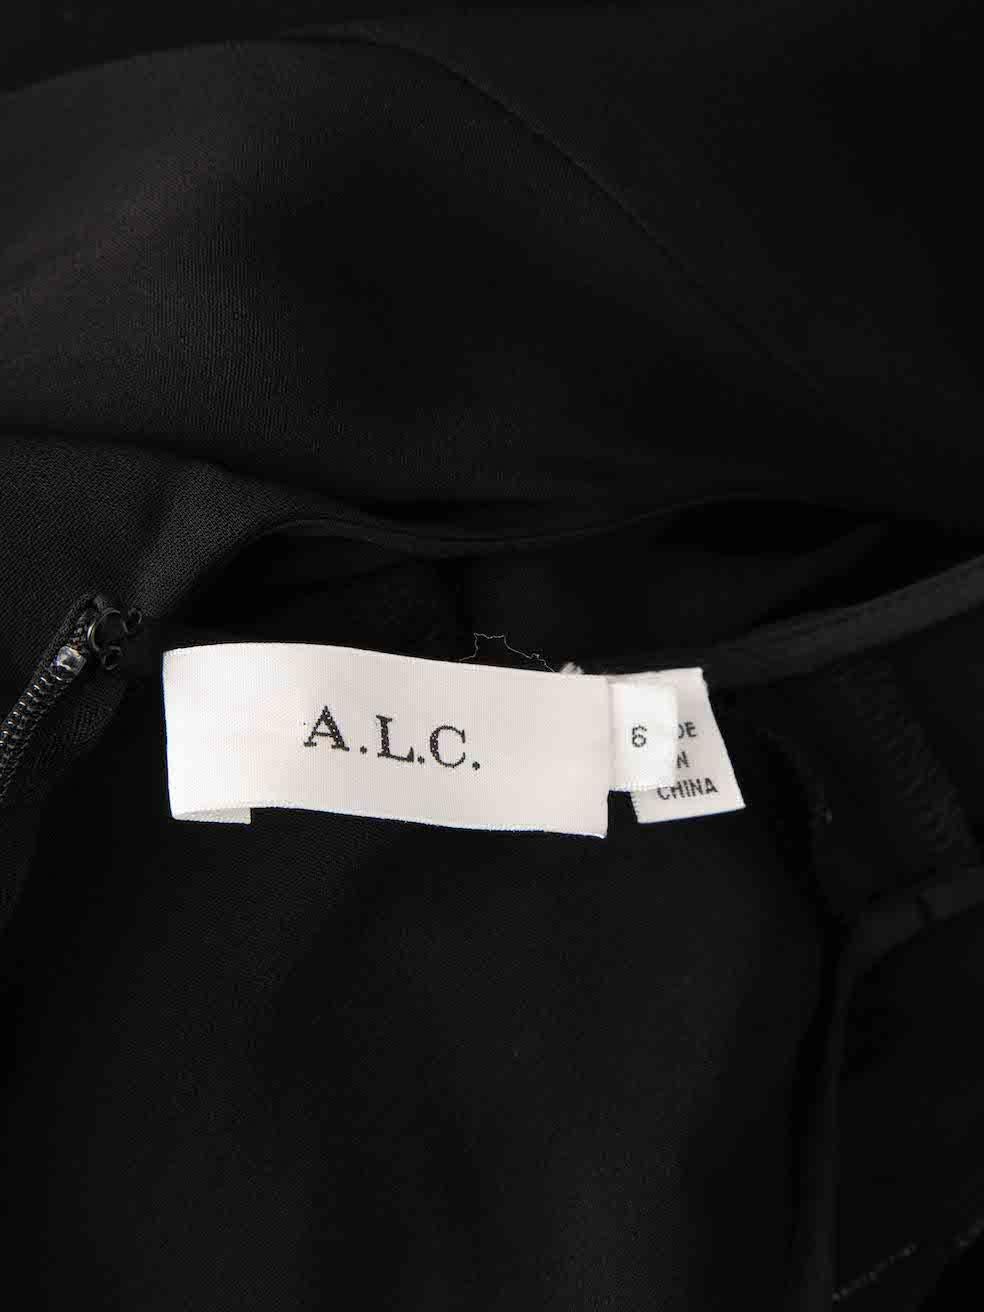 A.L.C Black Buckle Straps Detail Sleeveless Jumpsuit Size M For Sale 1